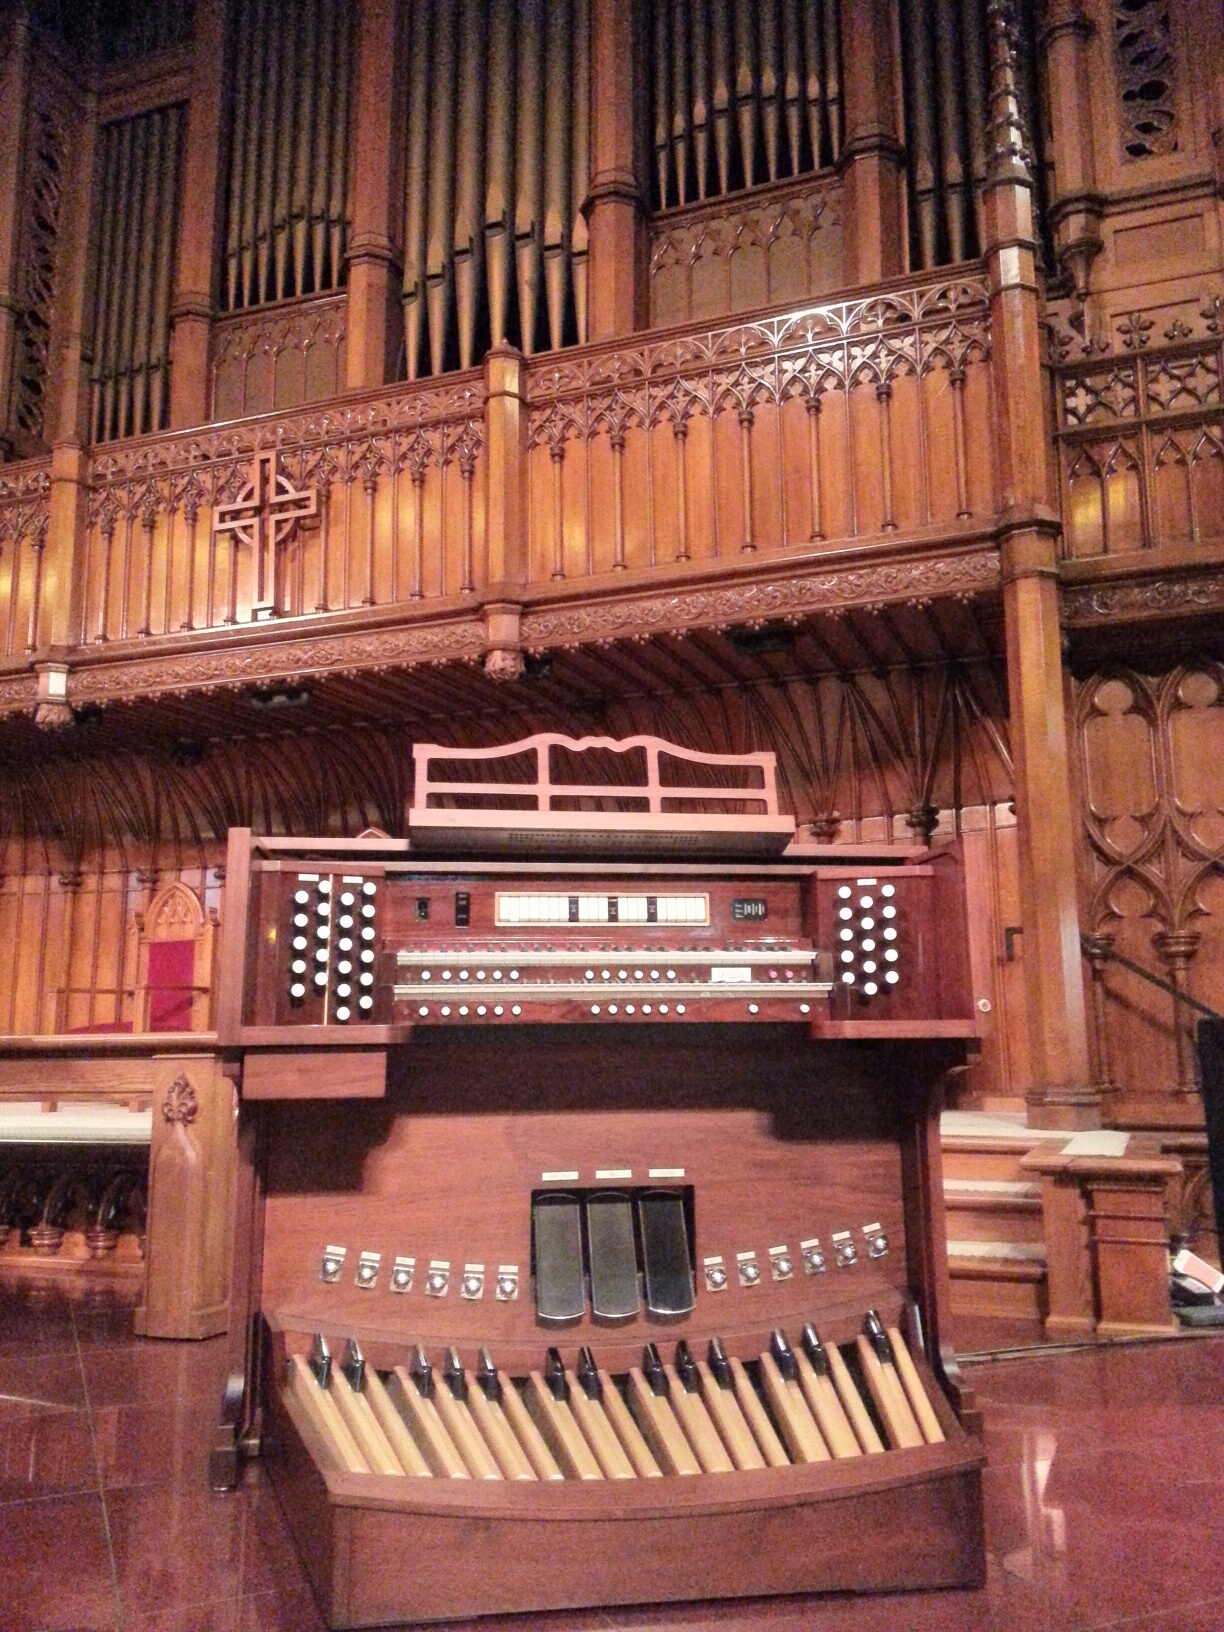 Allen Organs' Diane Bish Series organ at Third Presbyterian Church, Pittsburgh, PA